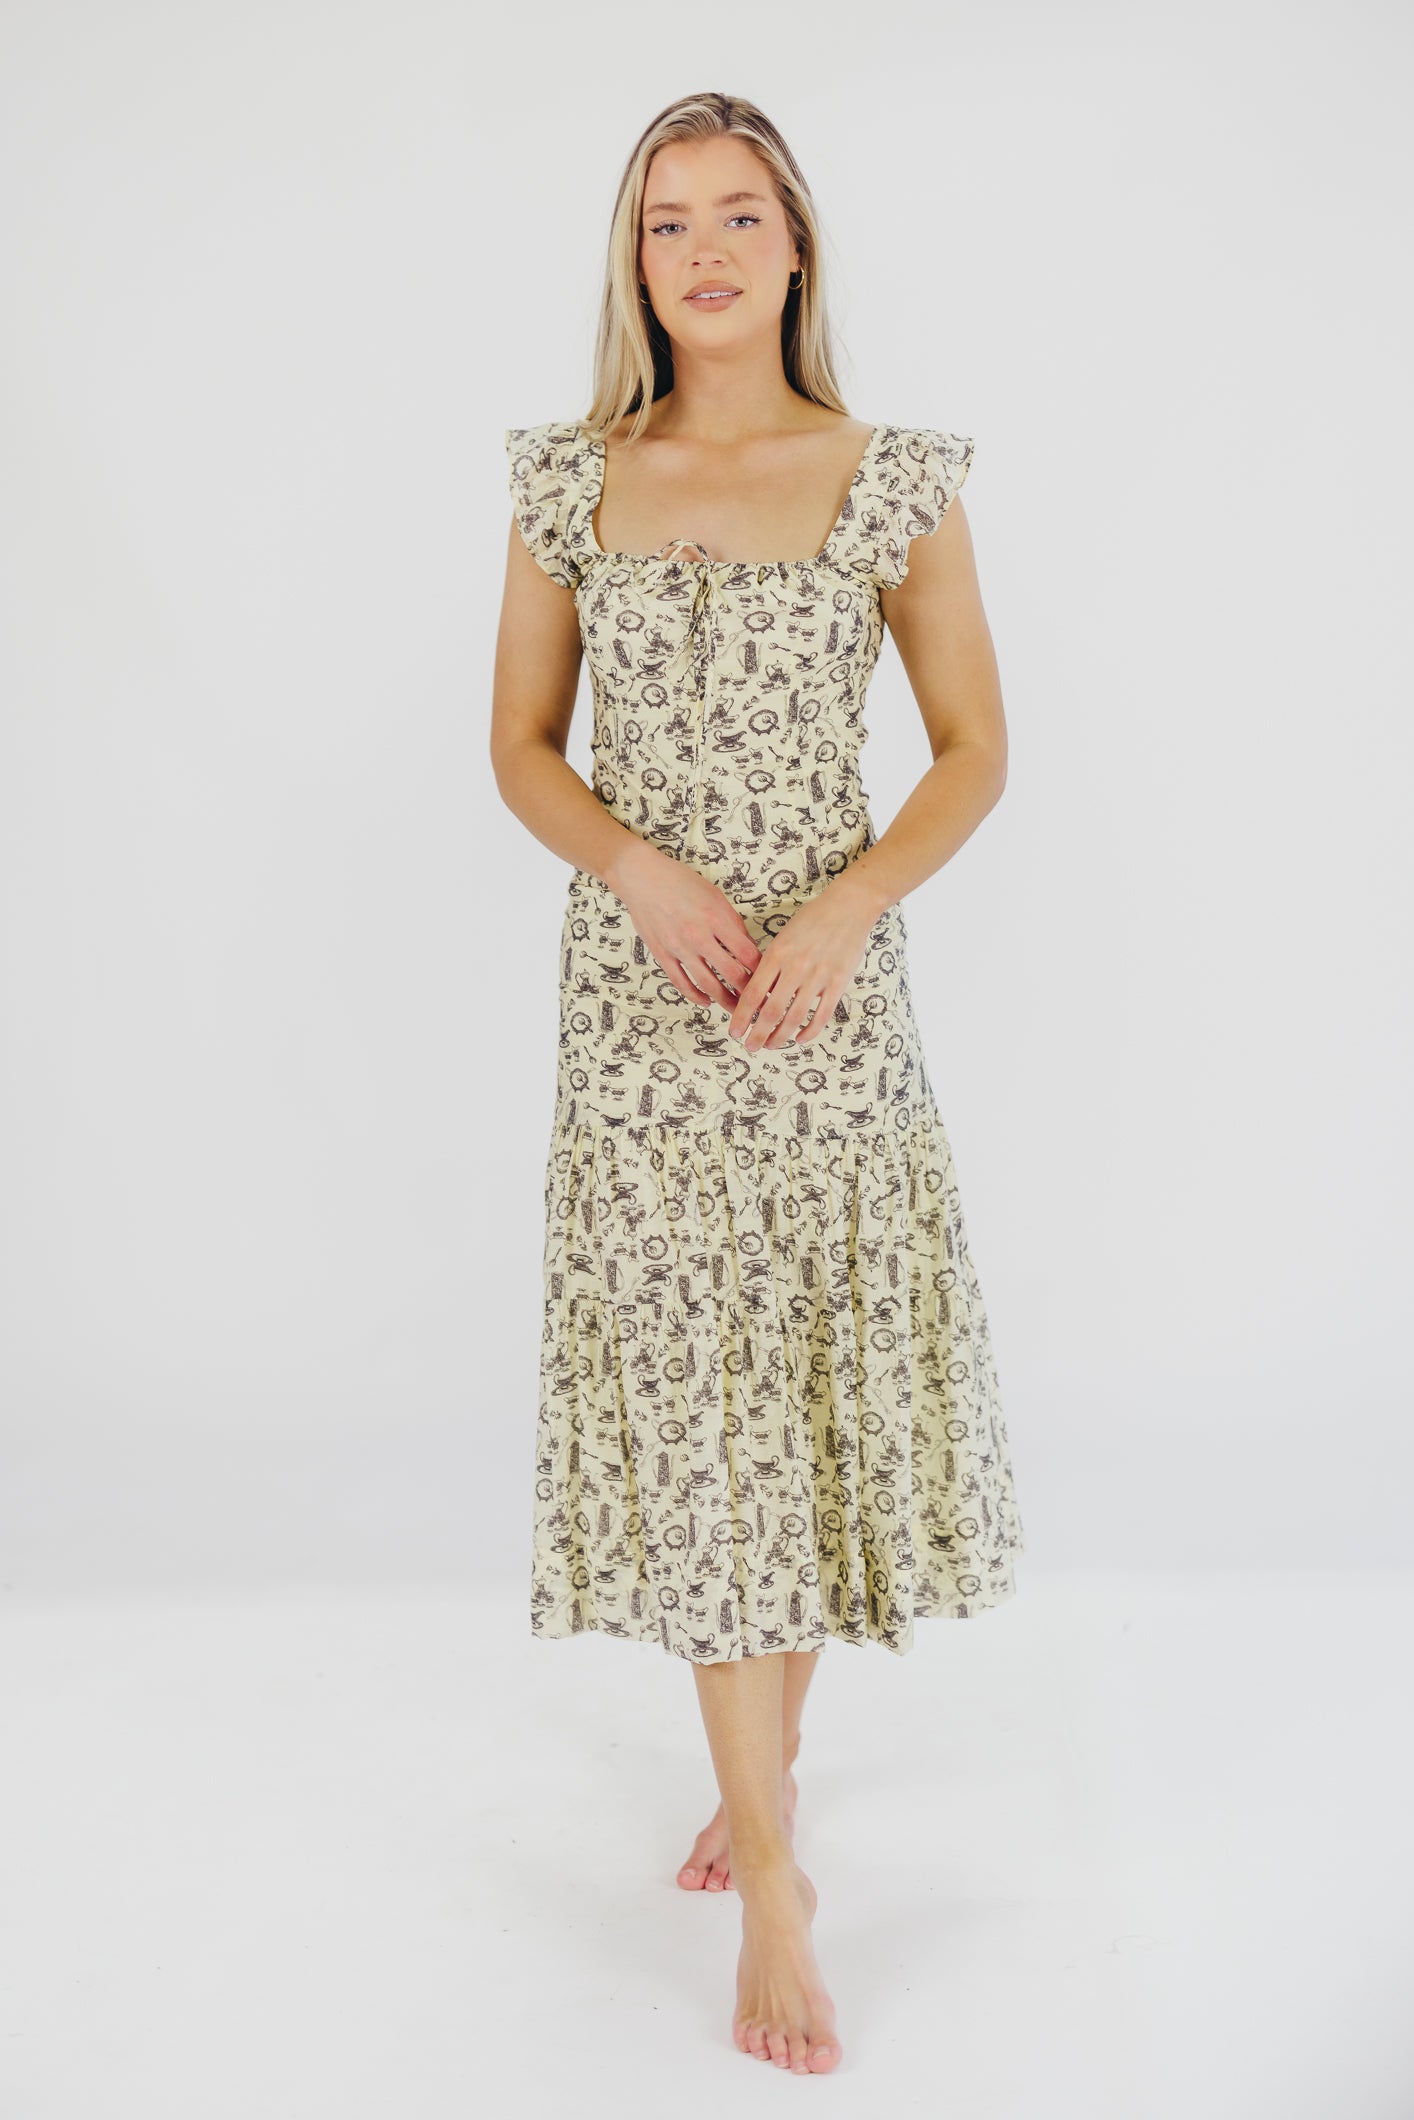 Emery Midi Dress in Vintage Tea -(Sizes S-XL)